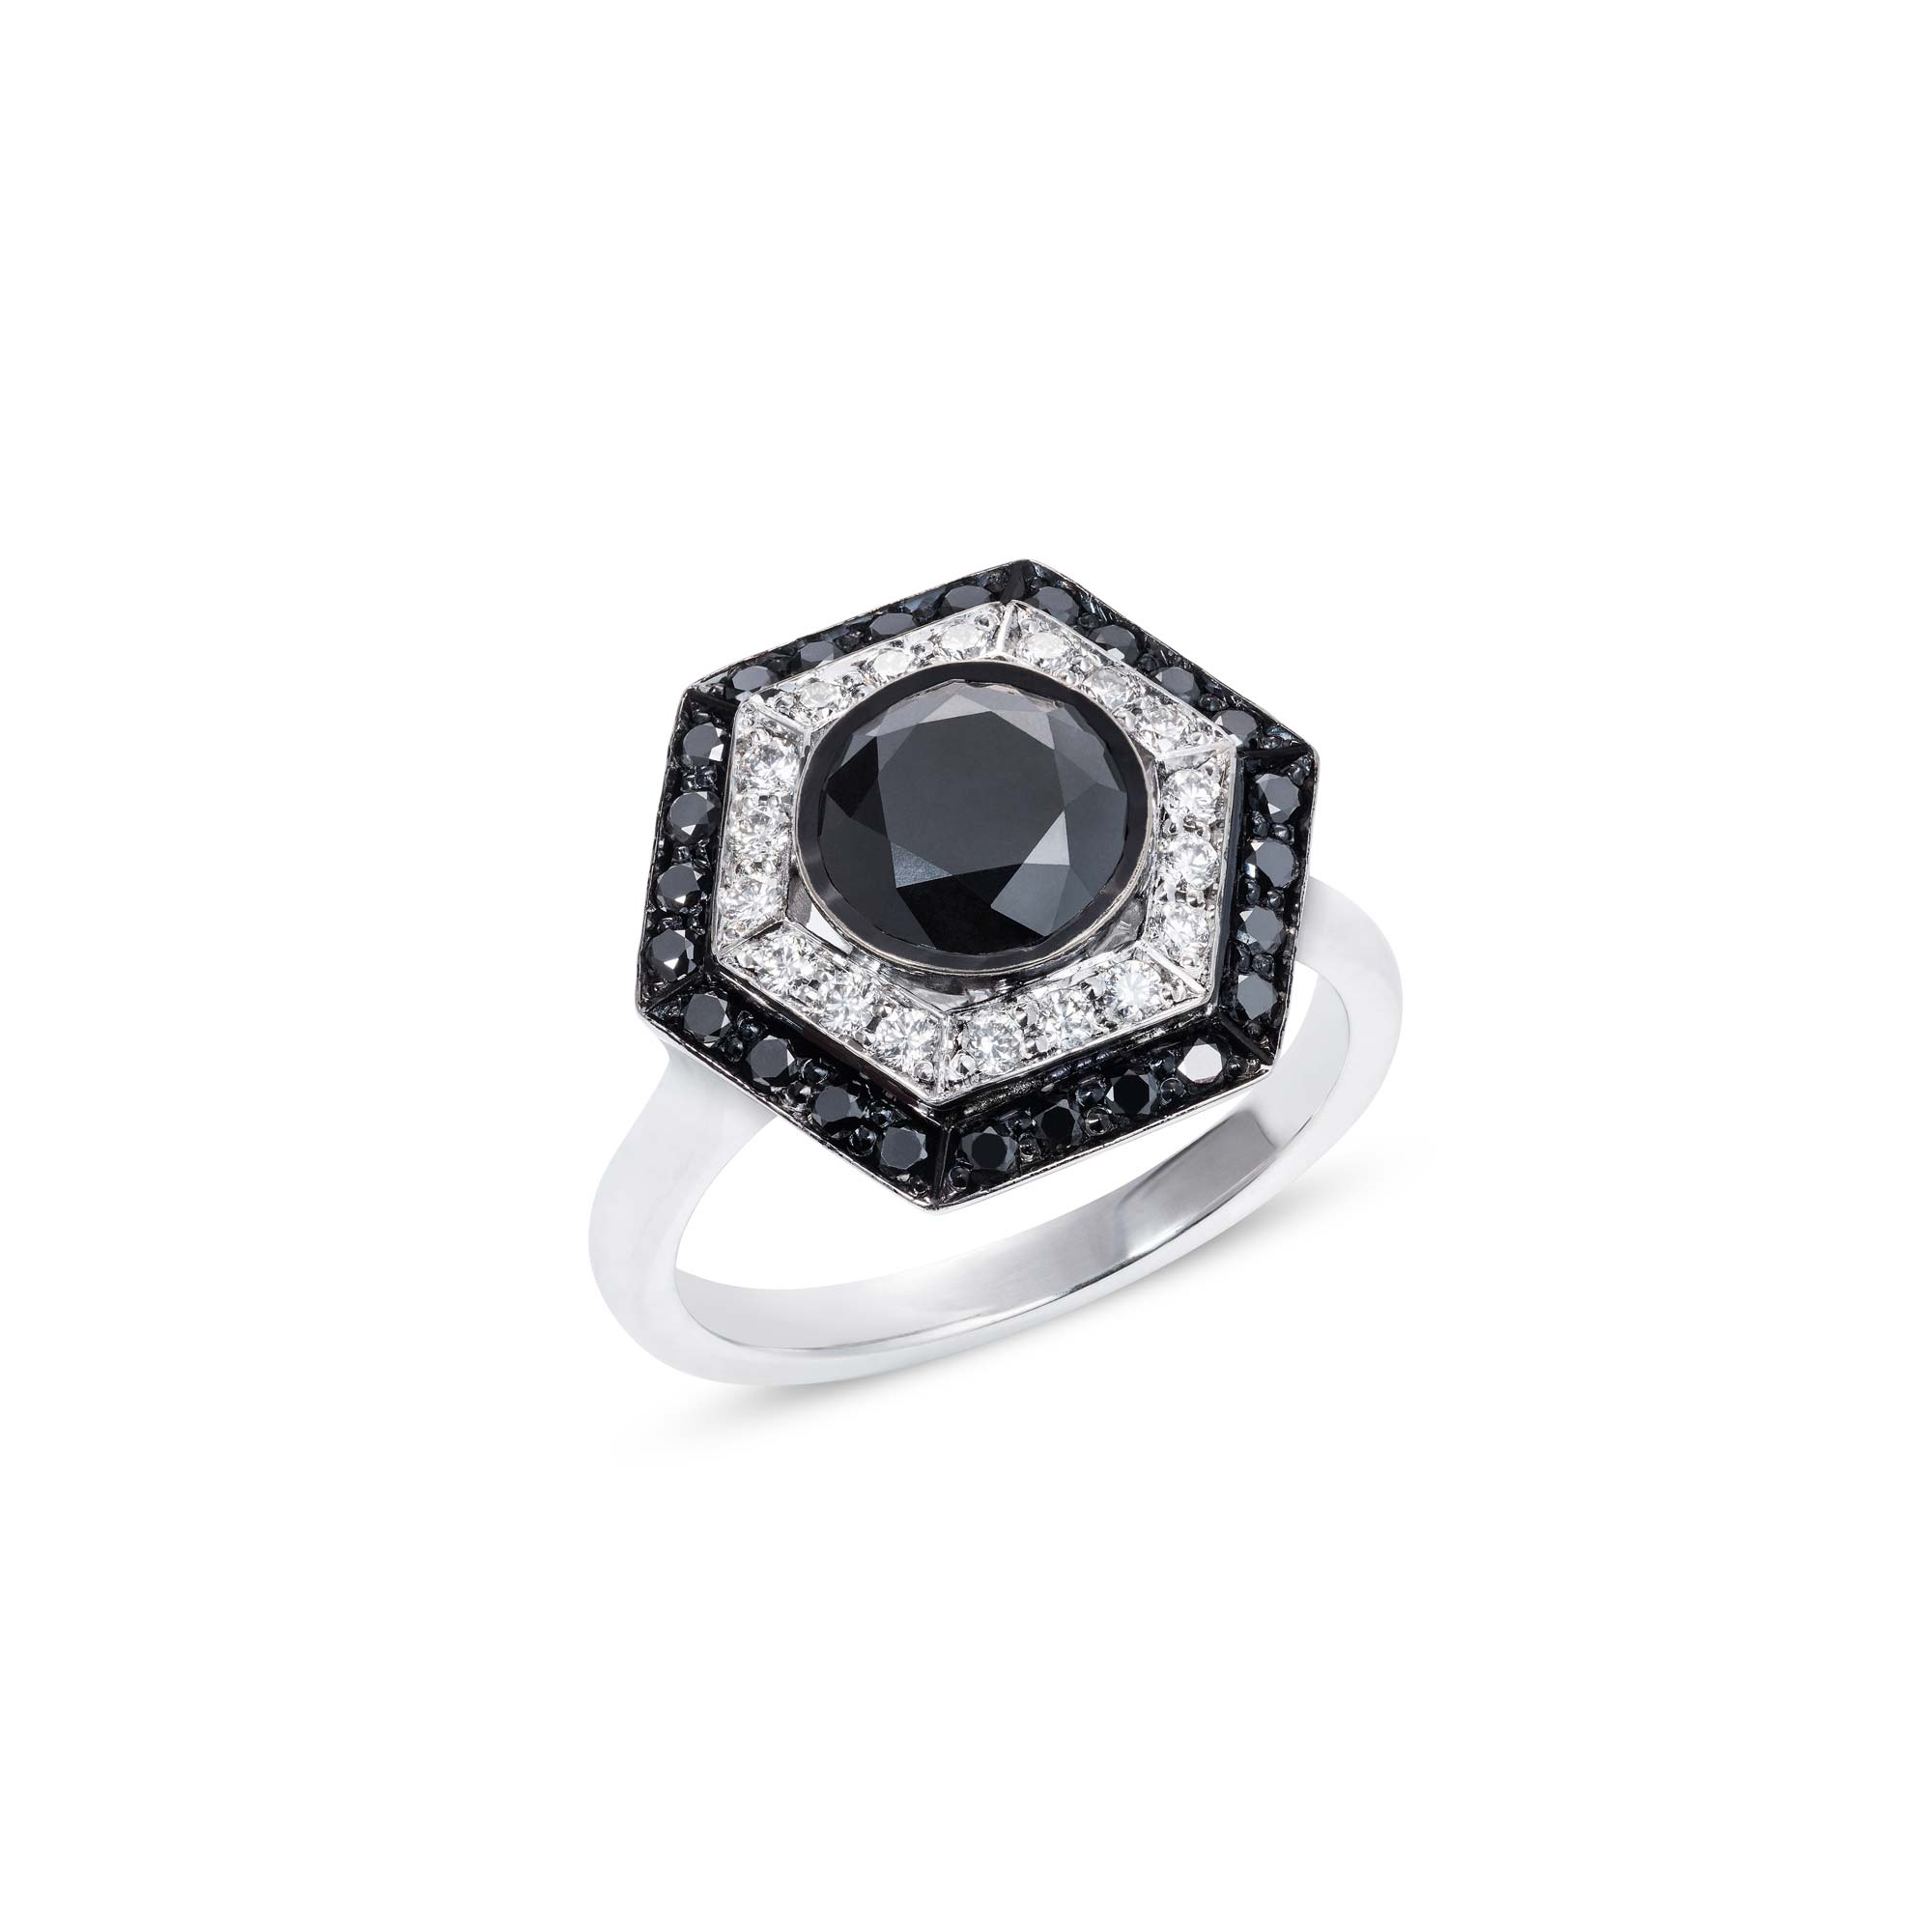 Black and white diamond ring